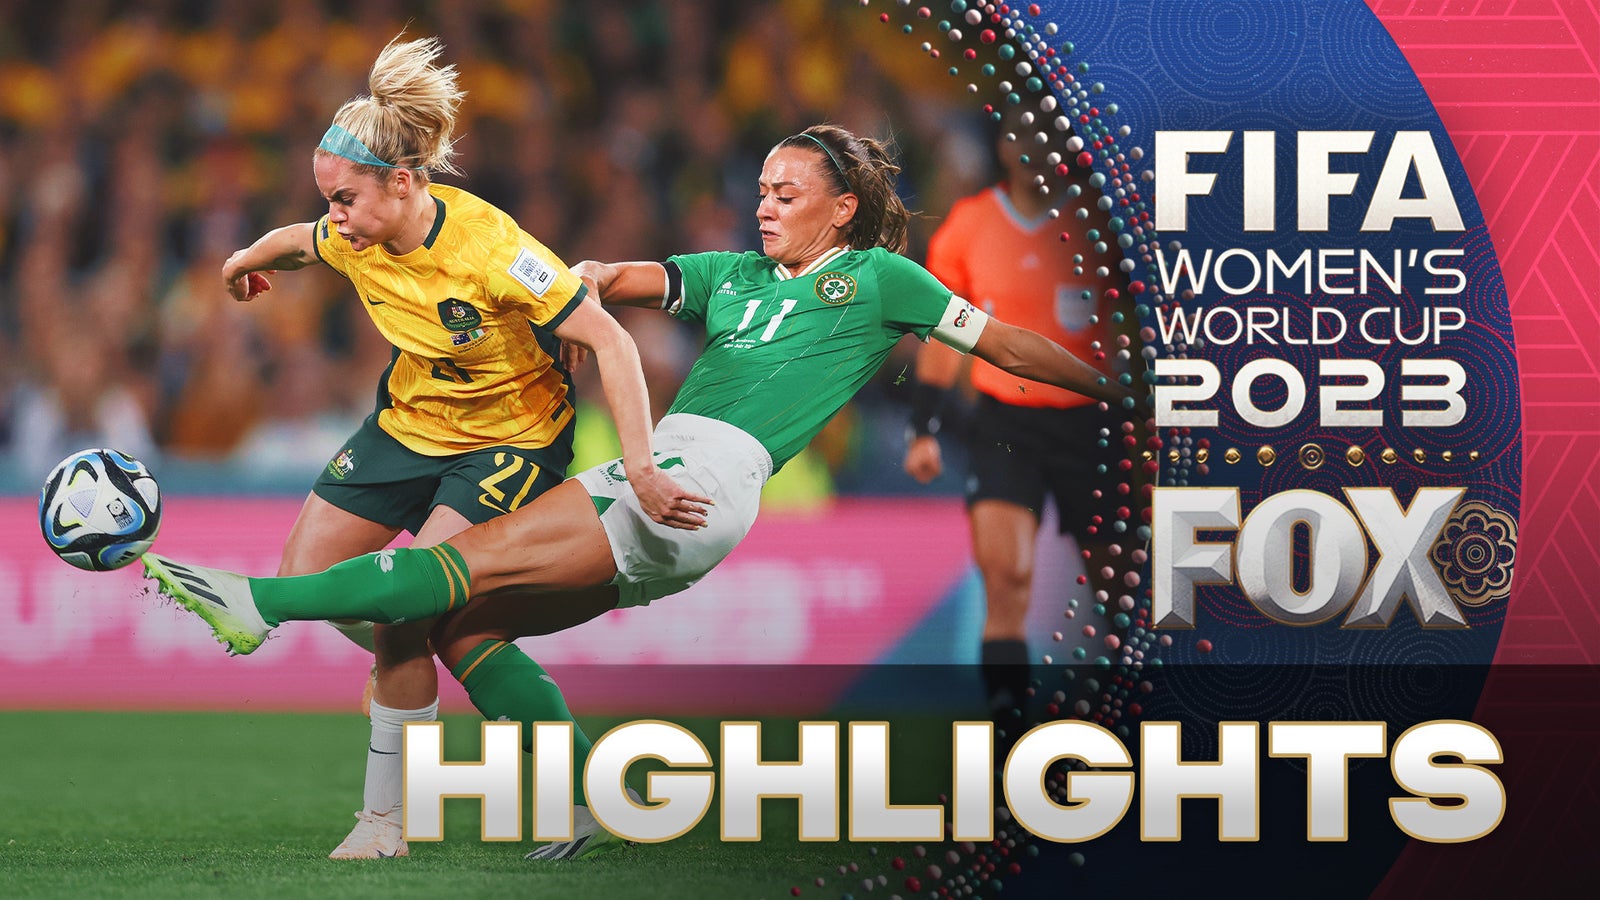 Highlights: Australia holds off Ireland, 1-0